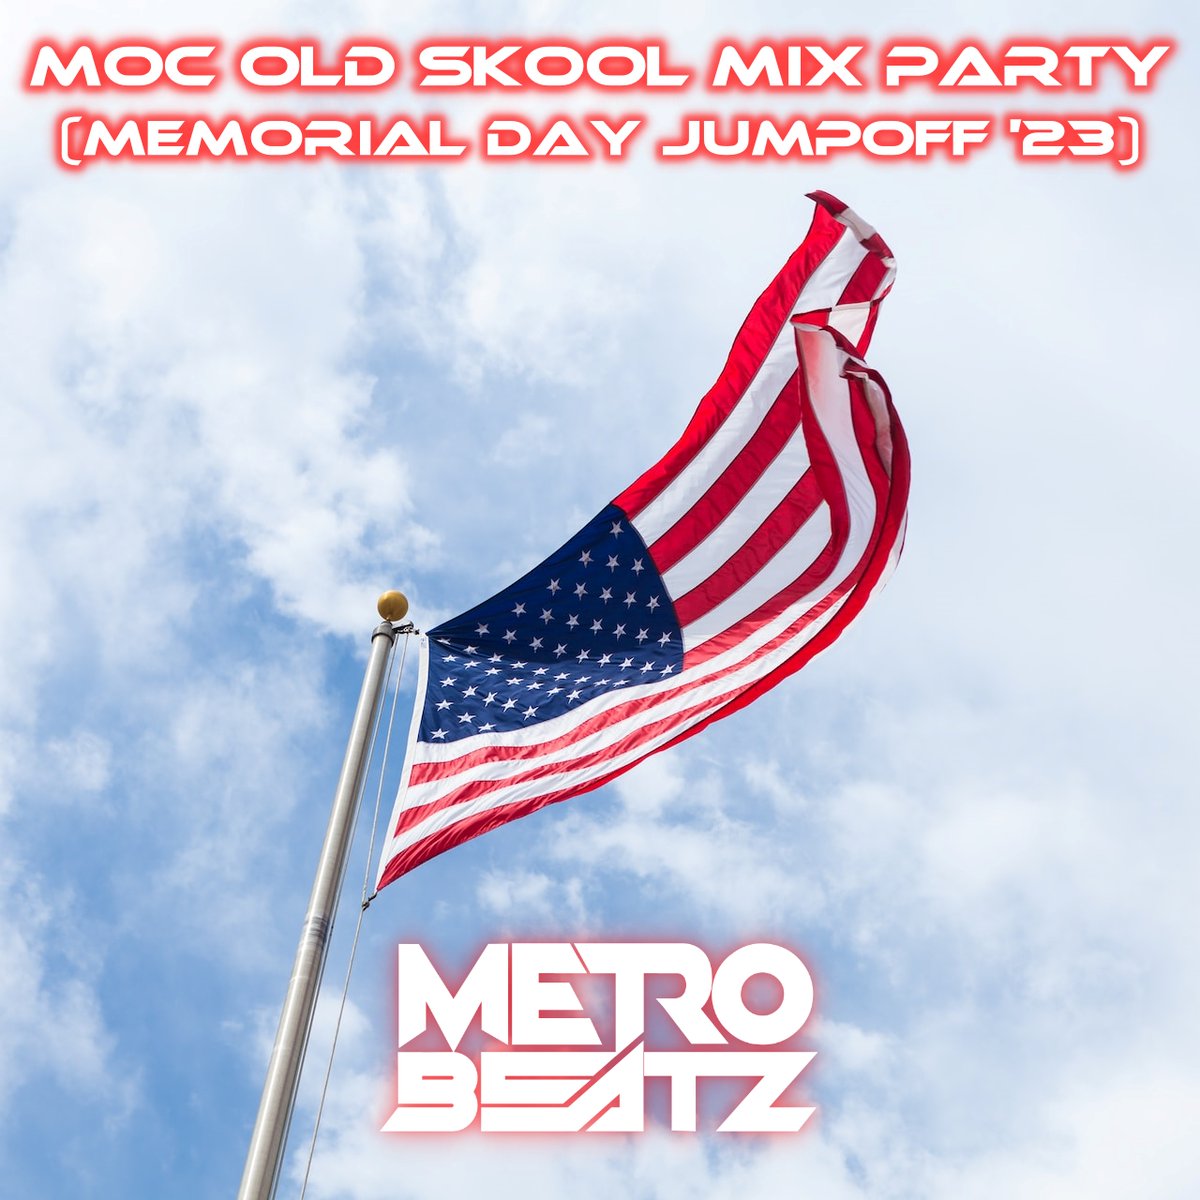 Kick off your Saturday night the right way on MOCRadio.com The party starts @ 6pm (EST) Happy Memorial Day!!!
#oldschoolmixes #dancehall #housemusic #remixes #metrobeatz #MOCRadio